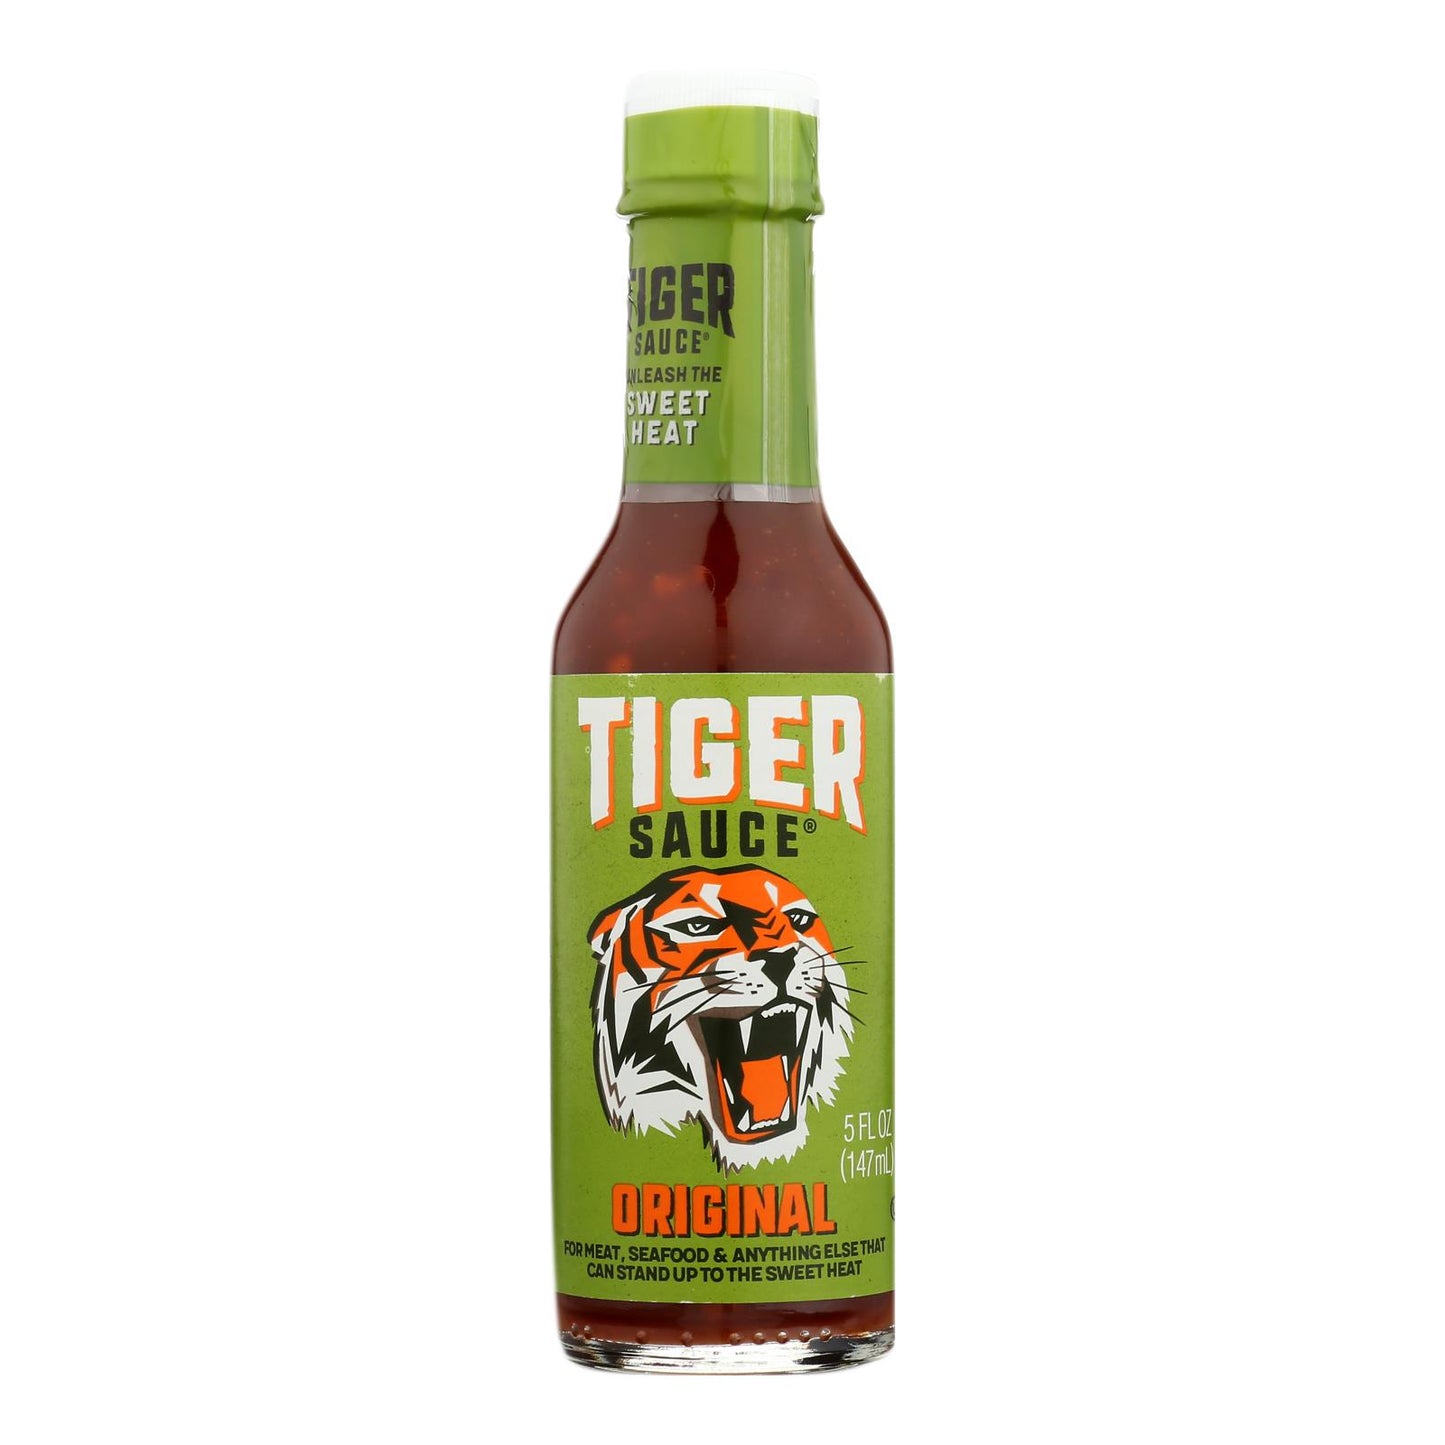 Try Me Tiger Sauce - Case Of 6 - 5 Fl Oz.